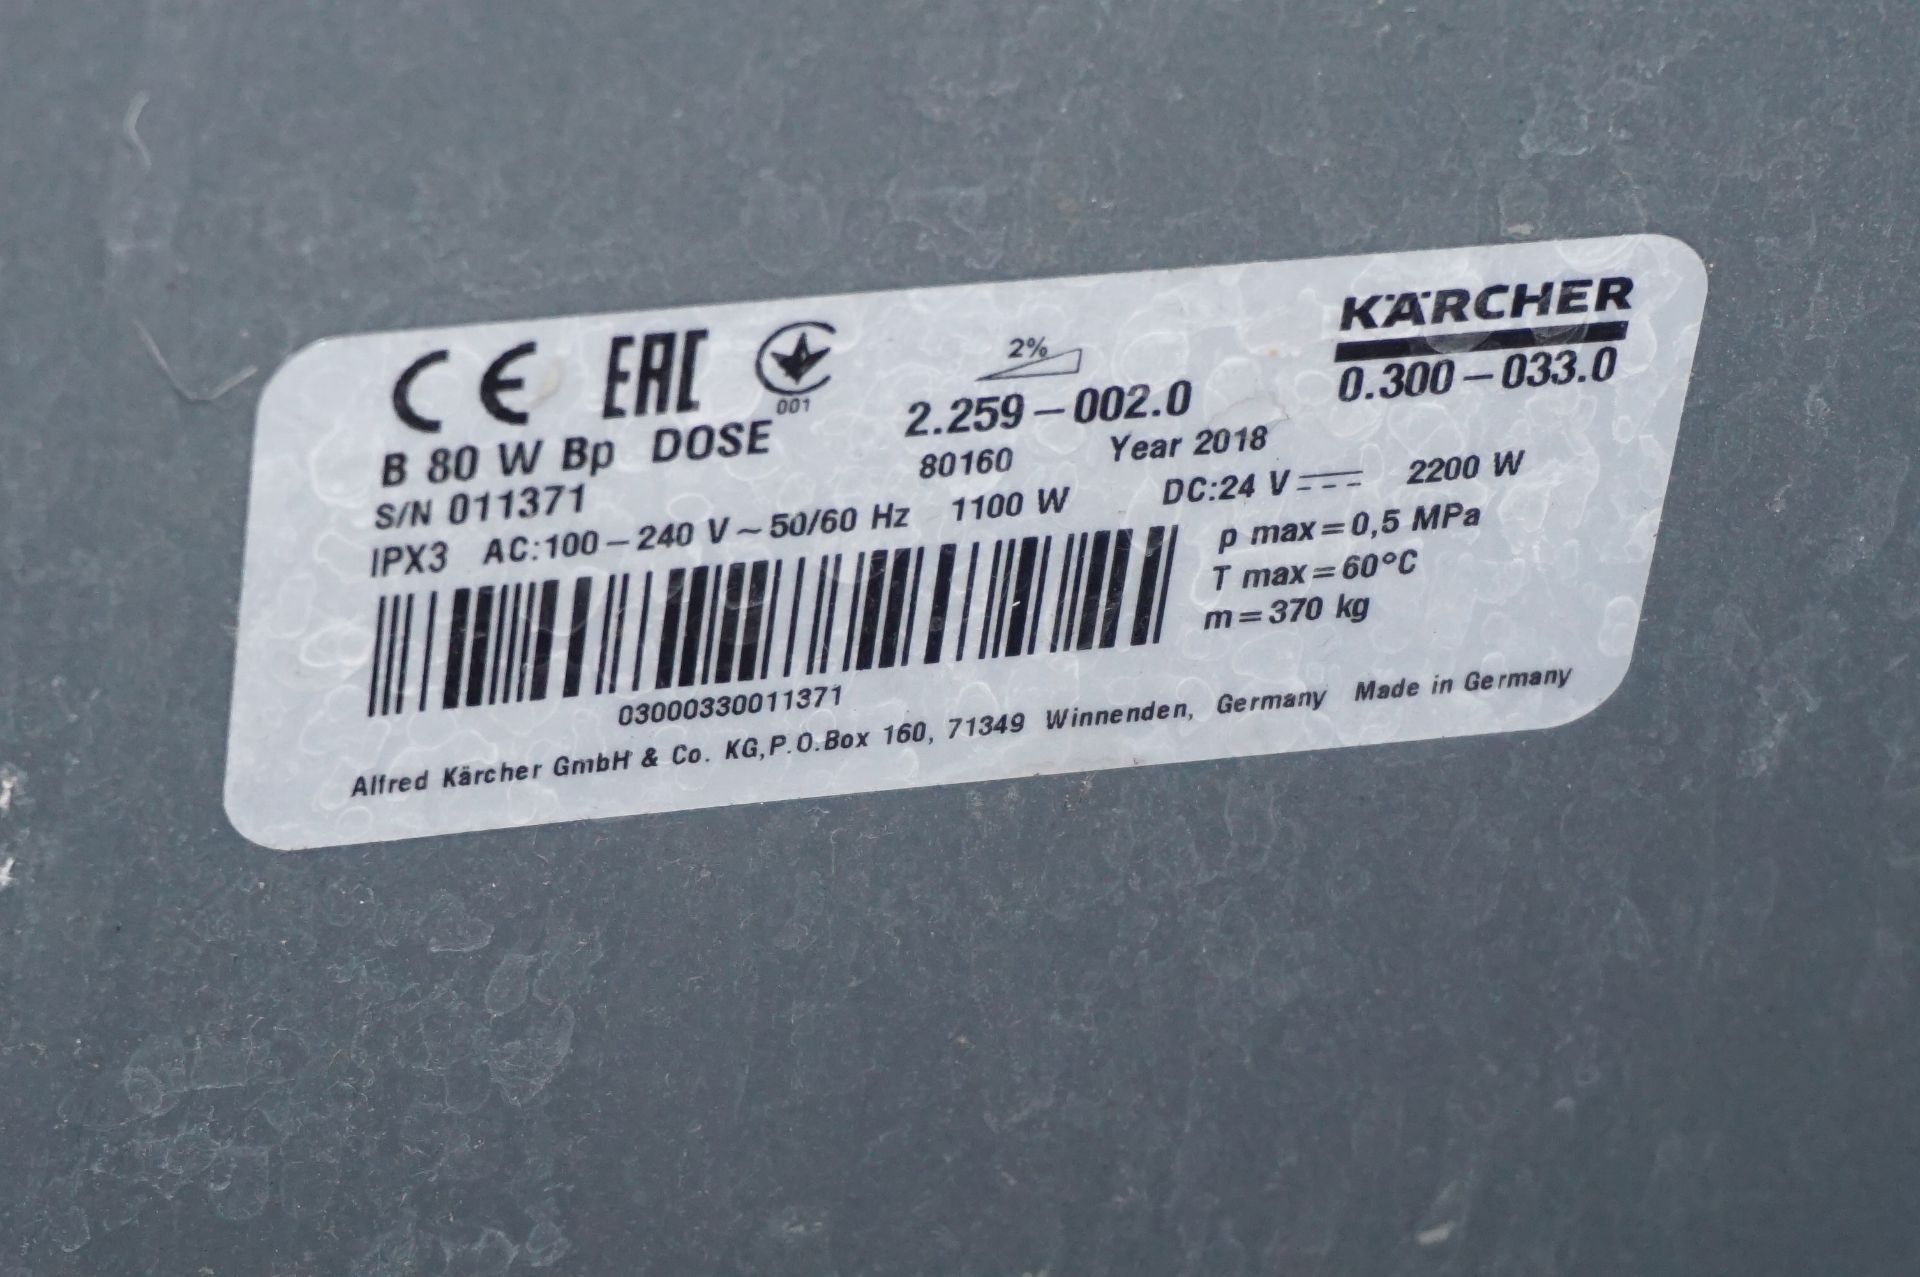 Karcher Professional D65 industrial floor scrubber/dryer - Image 7 of 7